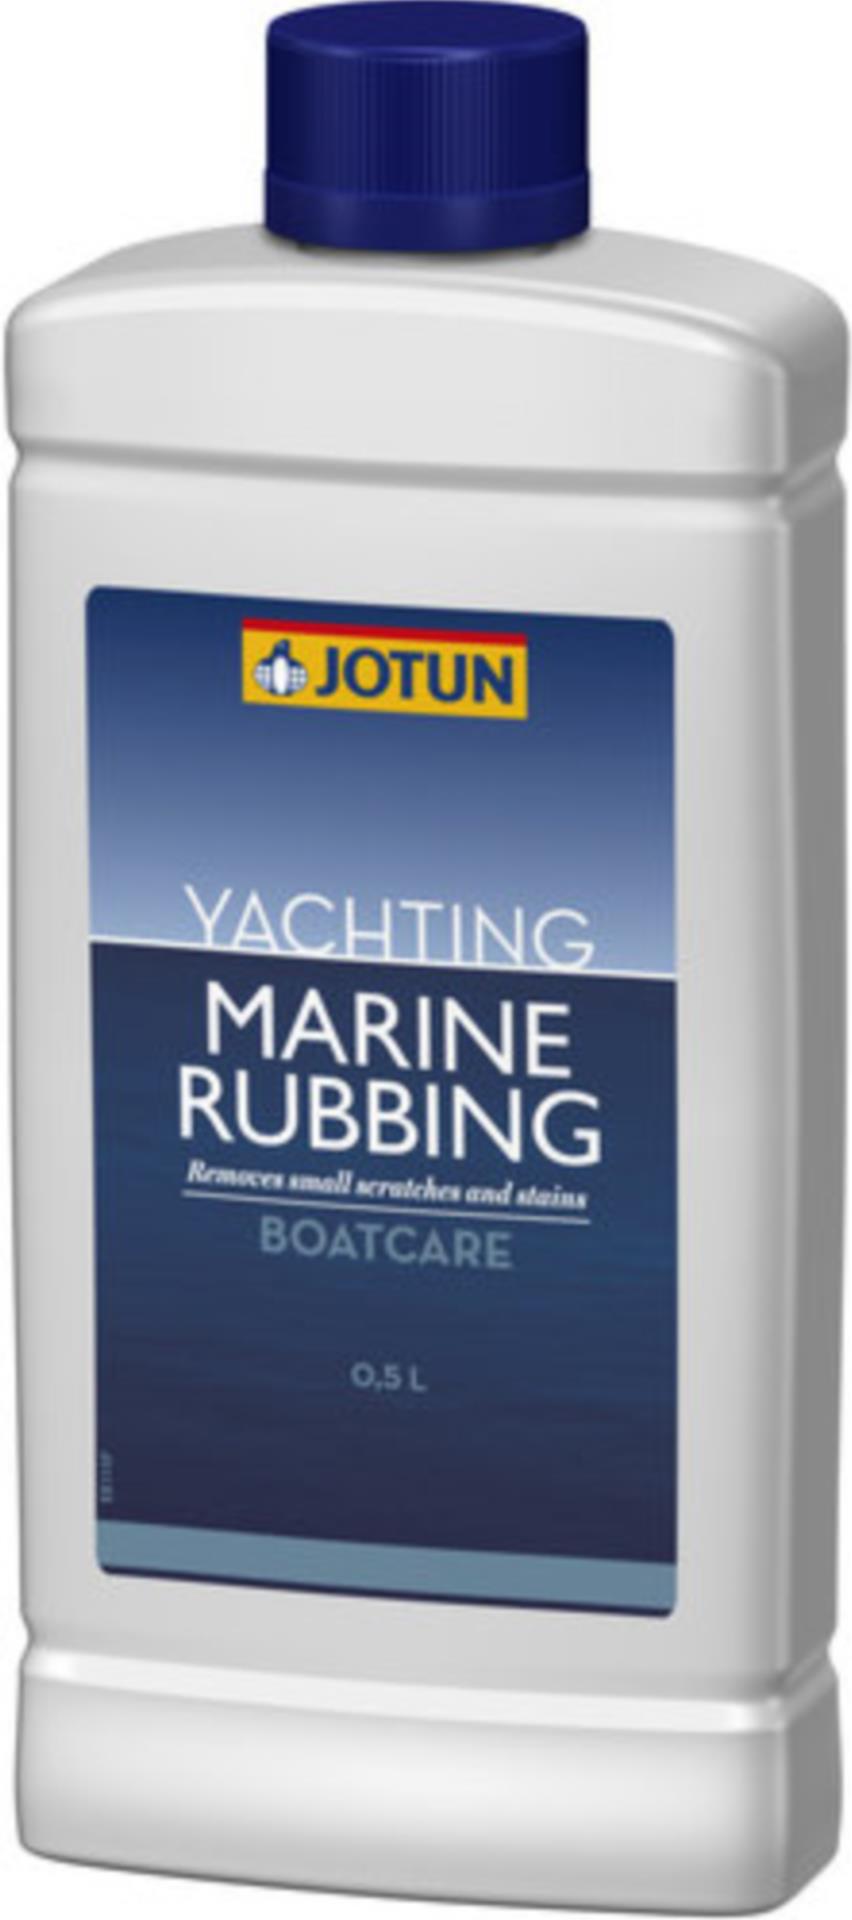 Jotun Marine Rubbing, 0,5ltr.